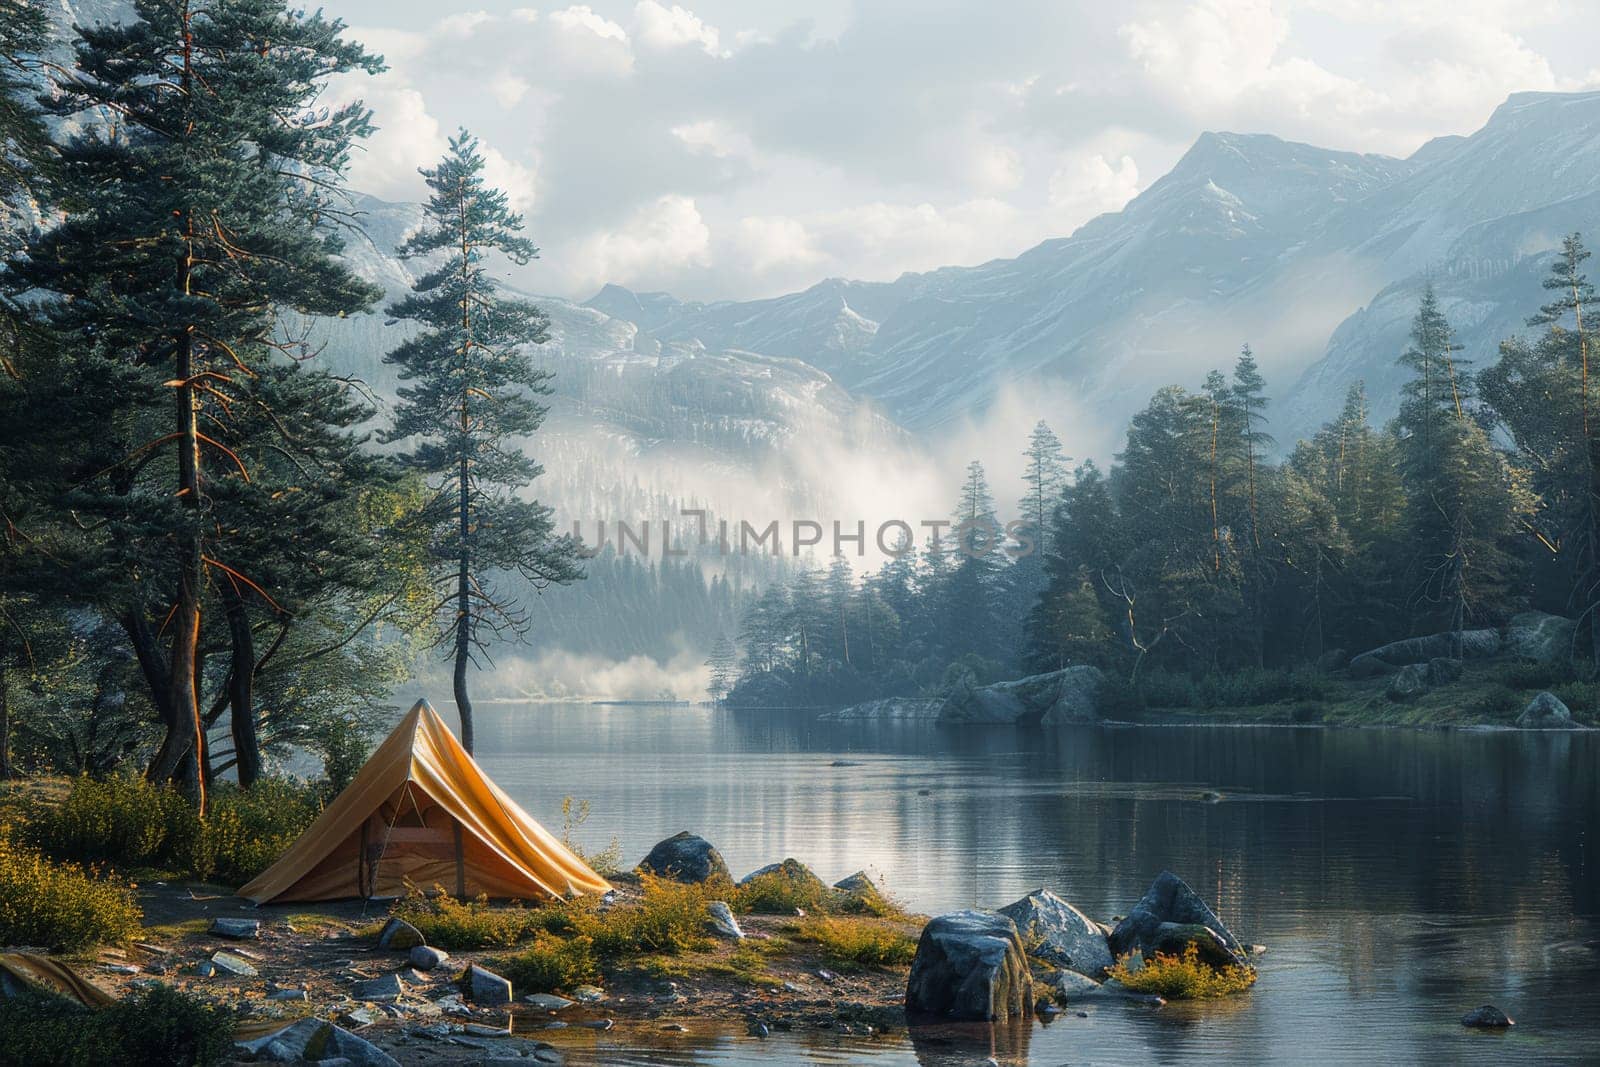 Camping tent, Nature travel concept. generative AI.